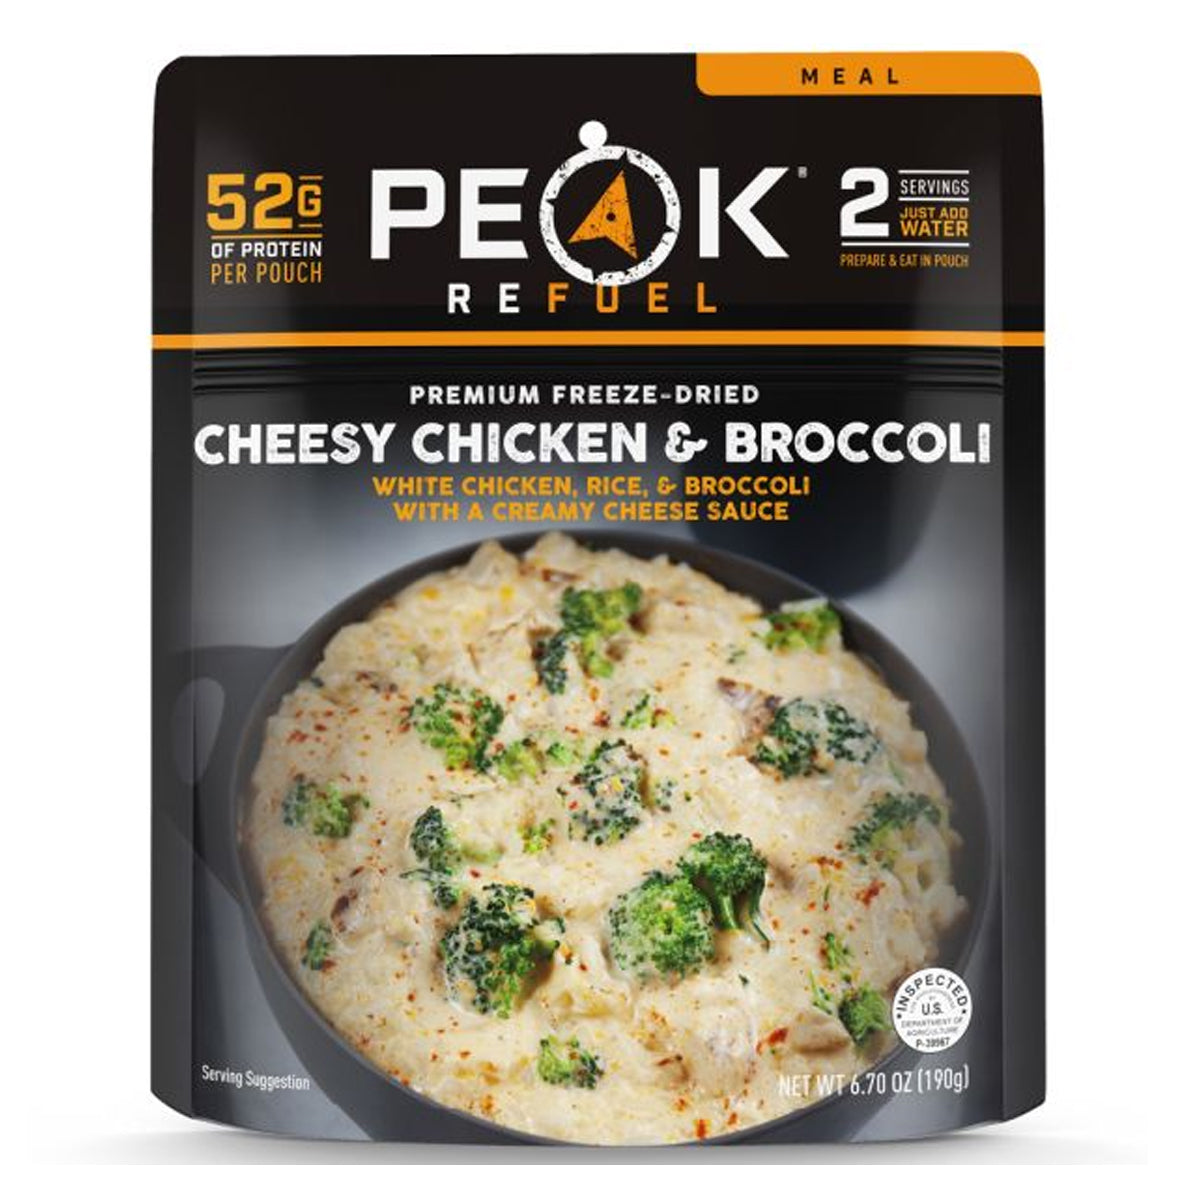 Peak Refuel Cheesy Chicken & Broccoli in  by GOHUNT | Peak Refuel - GOHUNT Shop